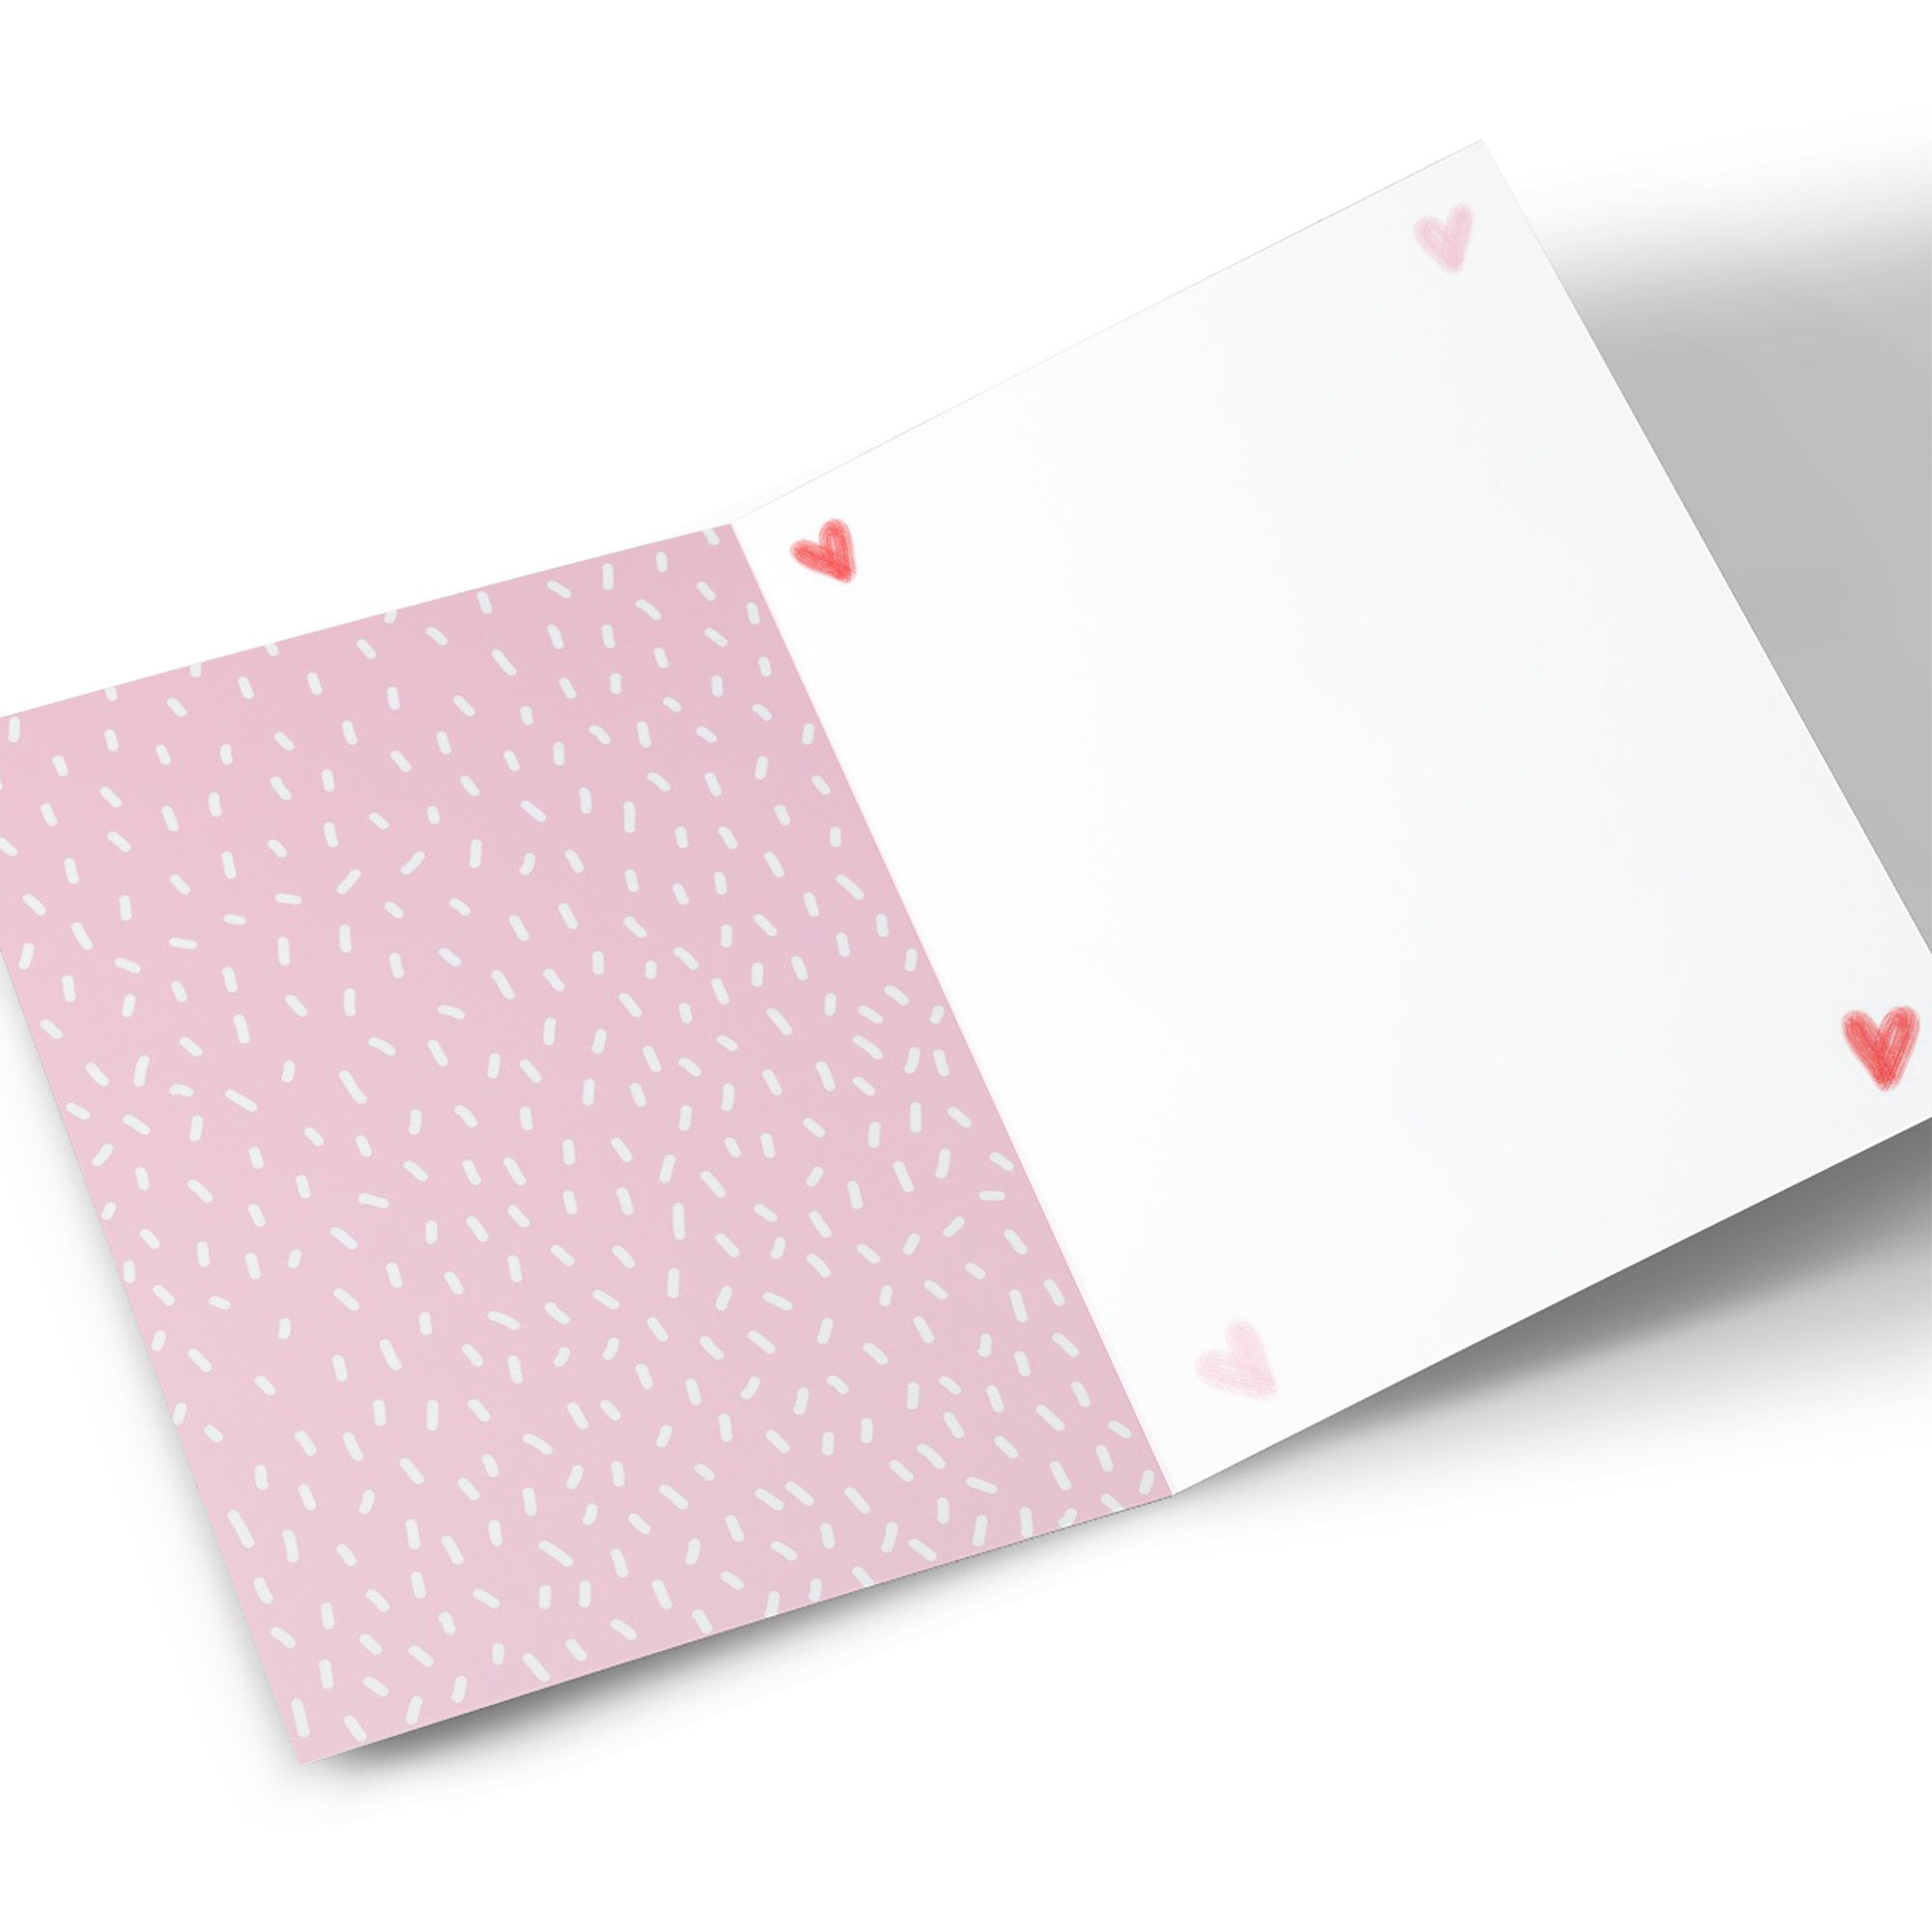 Personalised Lindsay Loves To Draw Card - Fling My Booberangers